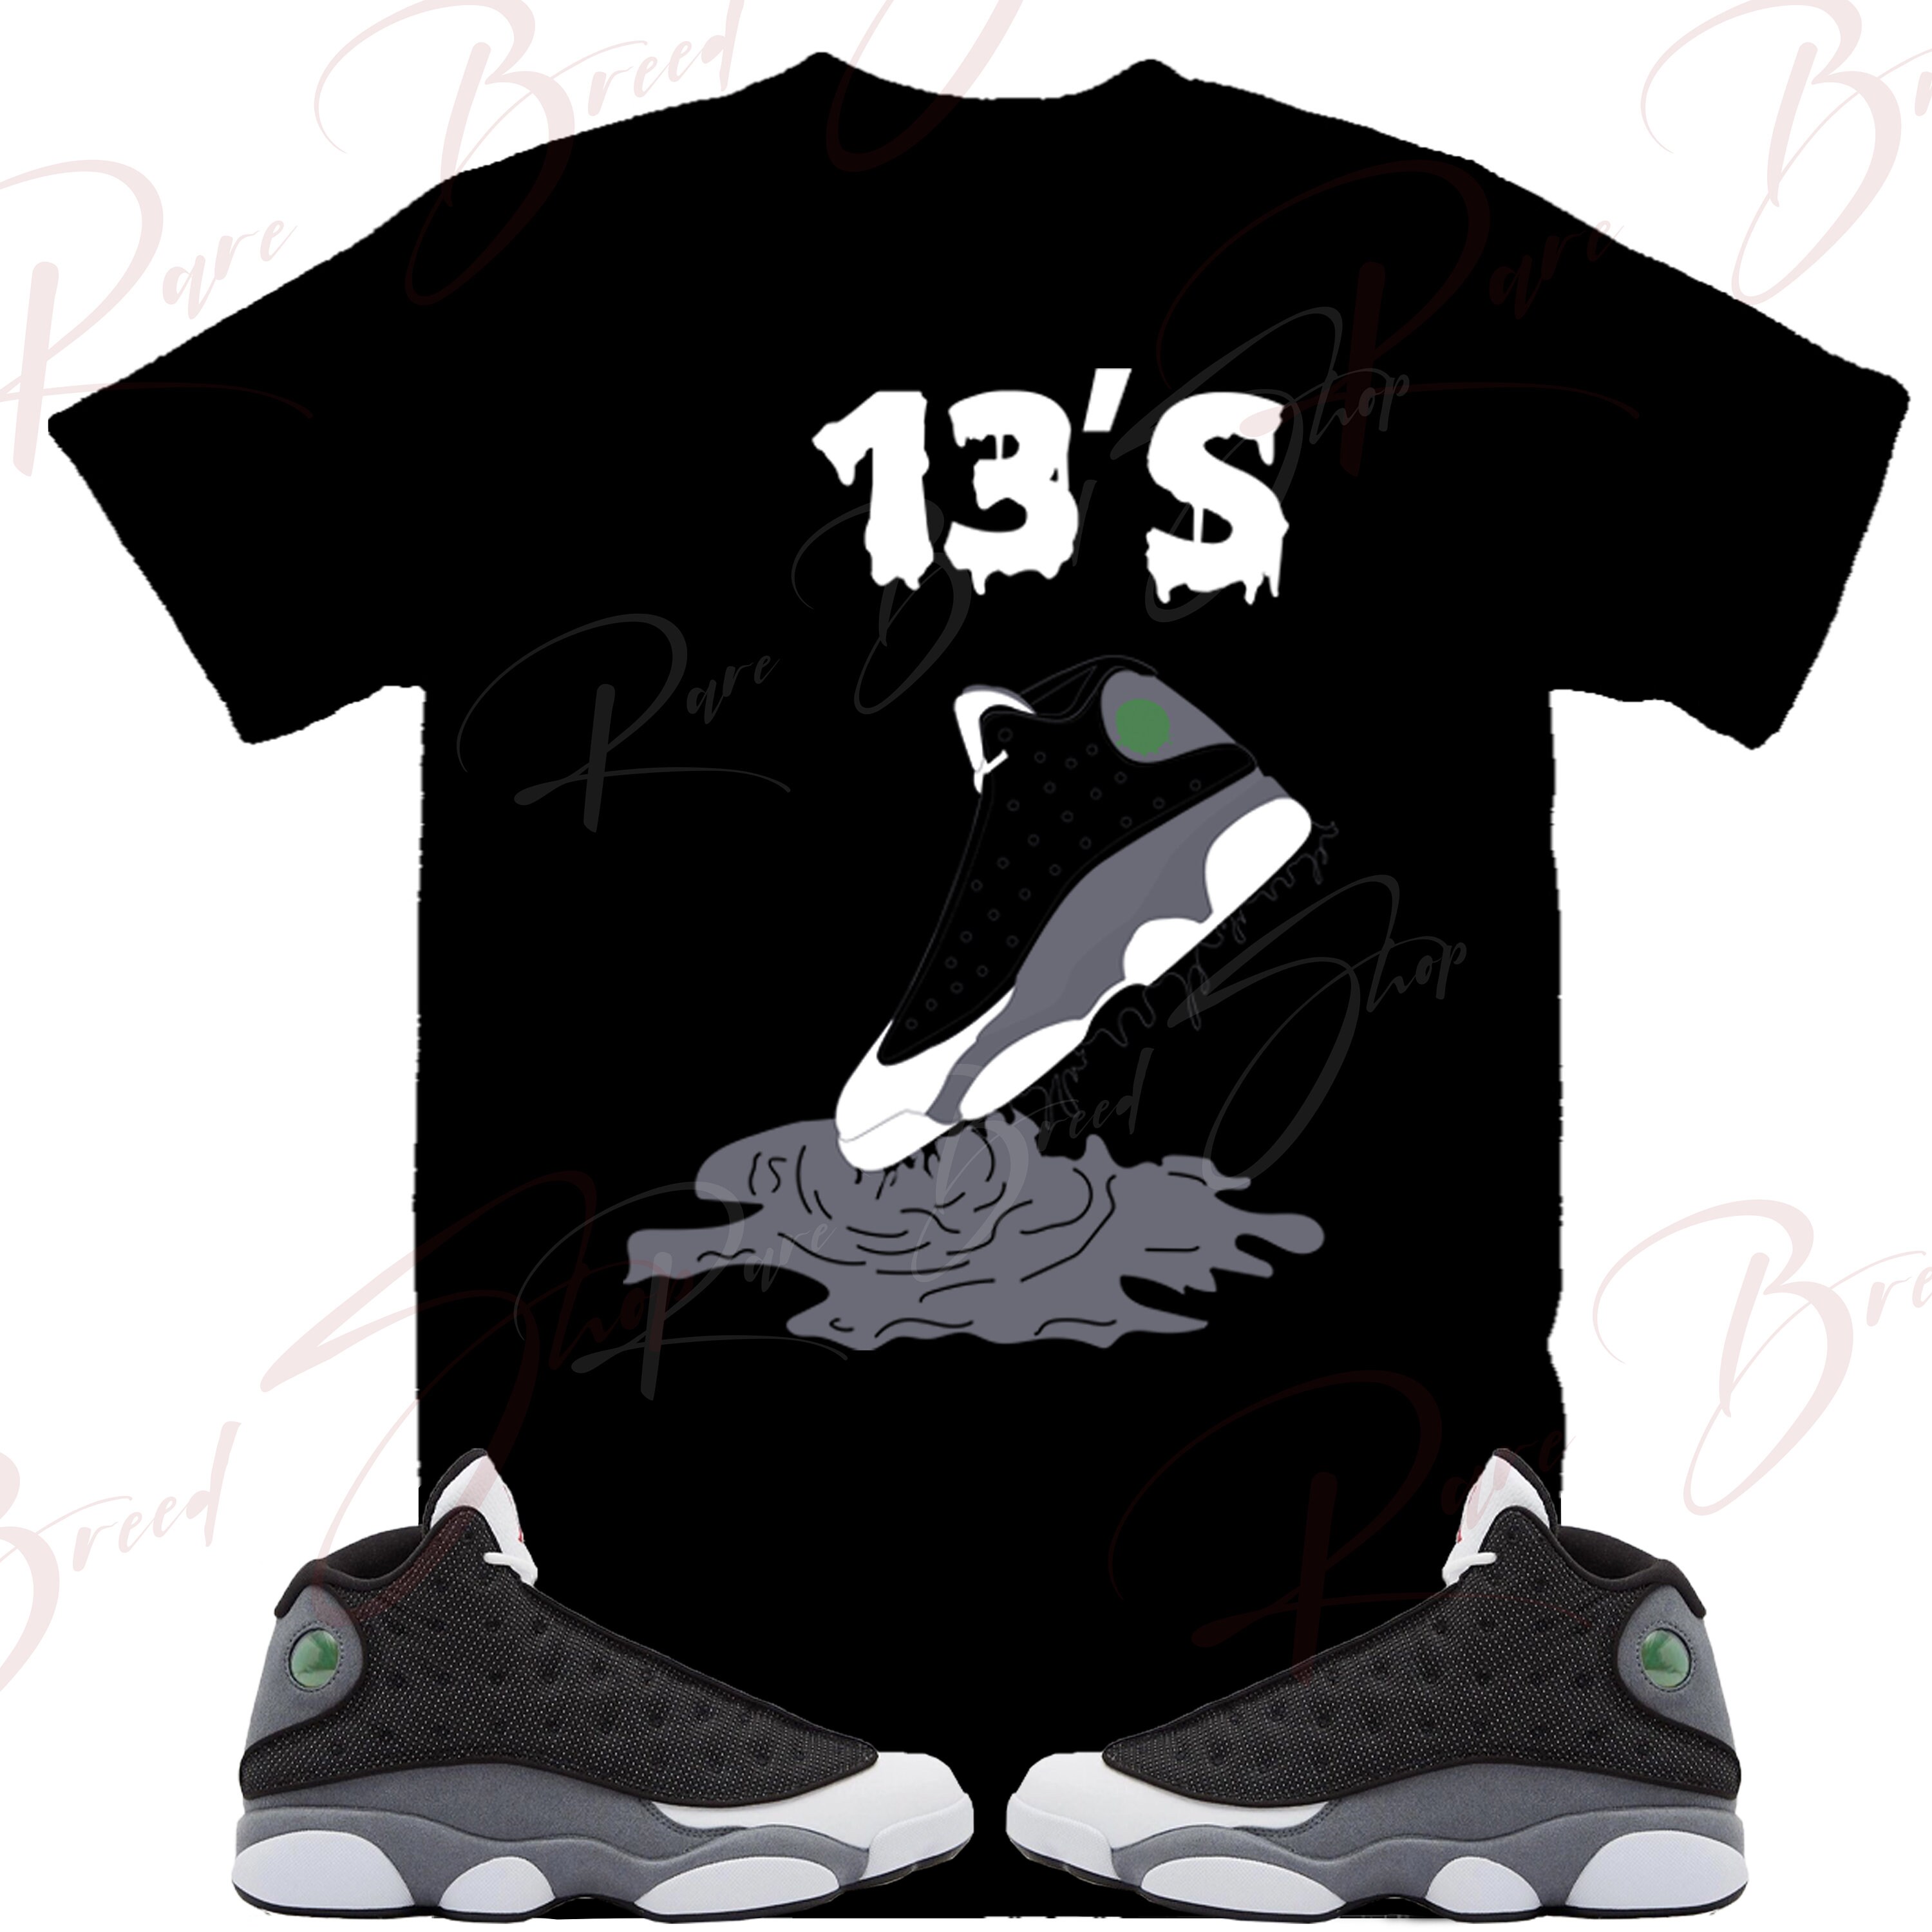 Air Jordan 13 Retro black Cat Vnds Og All Sz 12